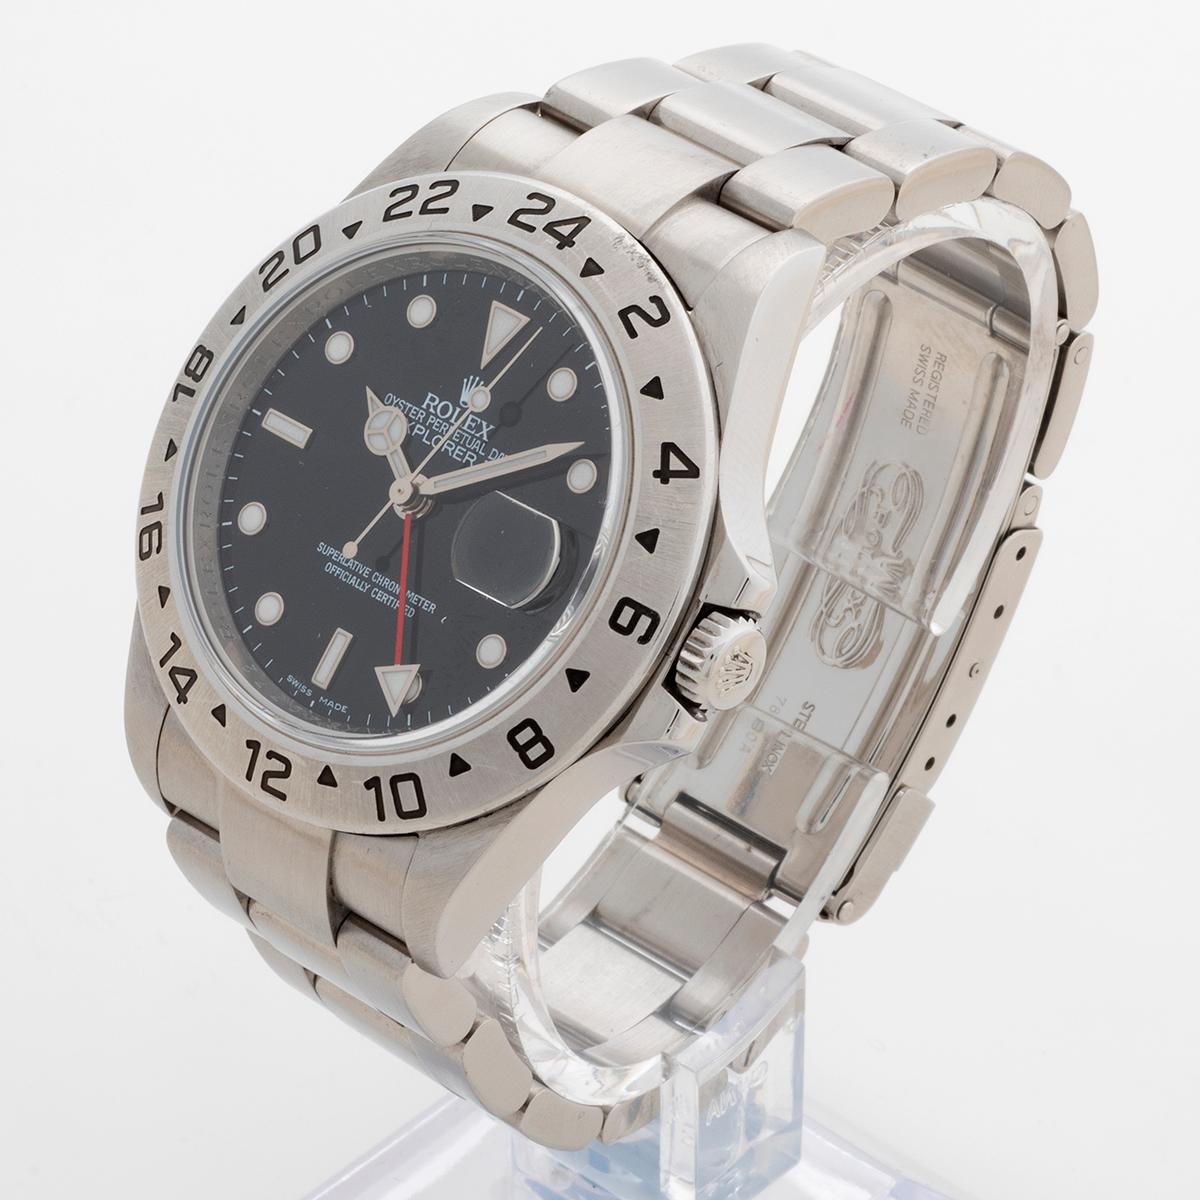 Women's or Men's Rolex Explorer II Wristwatch Ref 16570, 40mm Case, 3186 movement, Yr 2010.